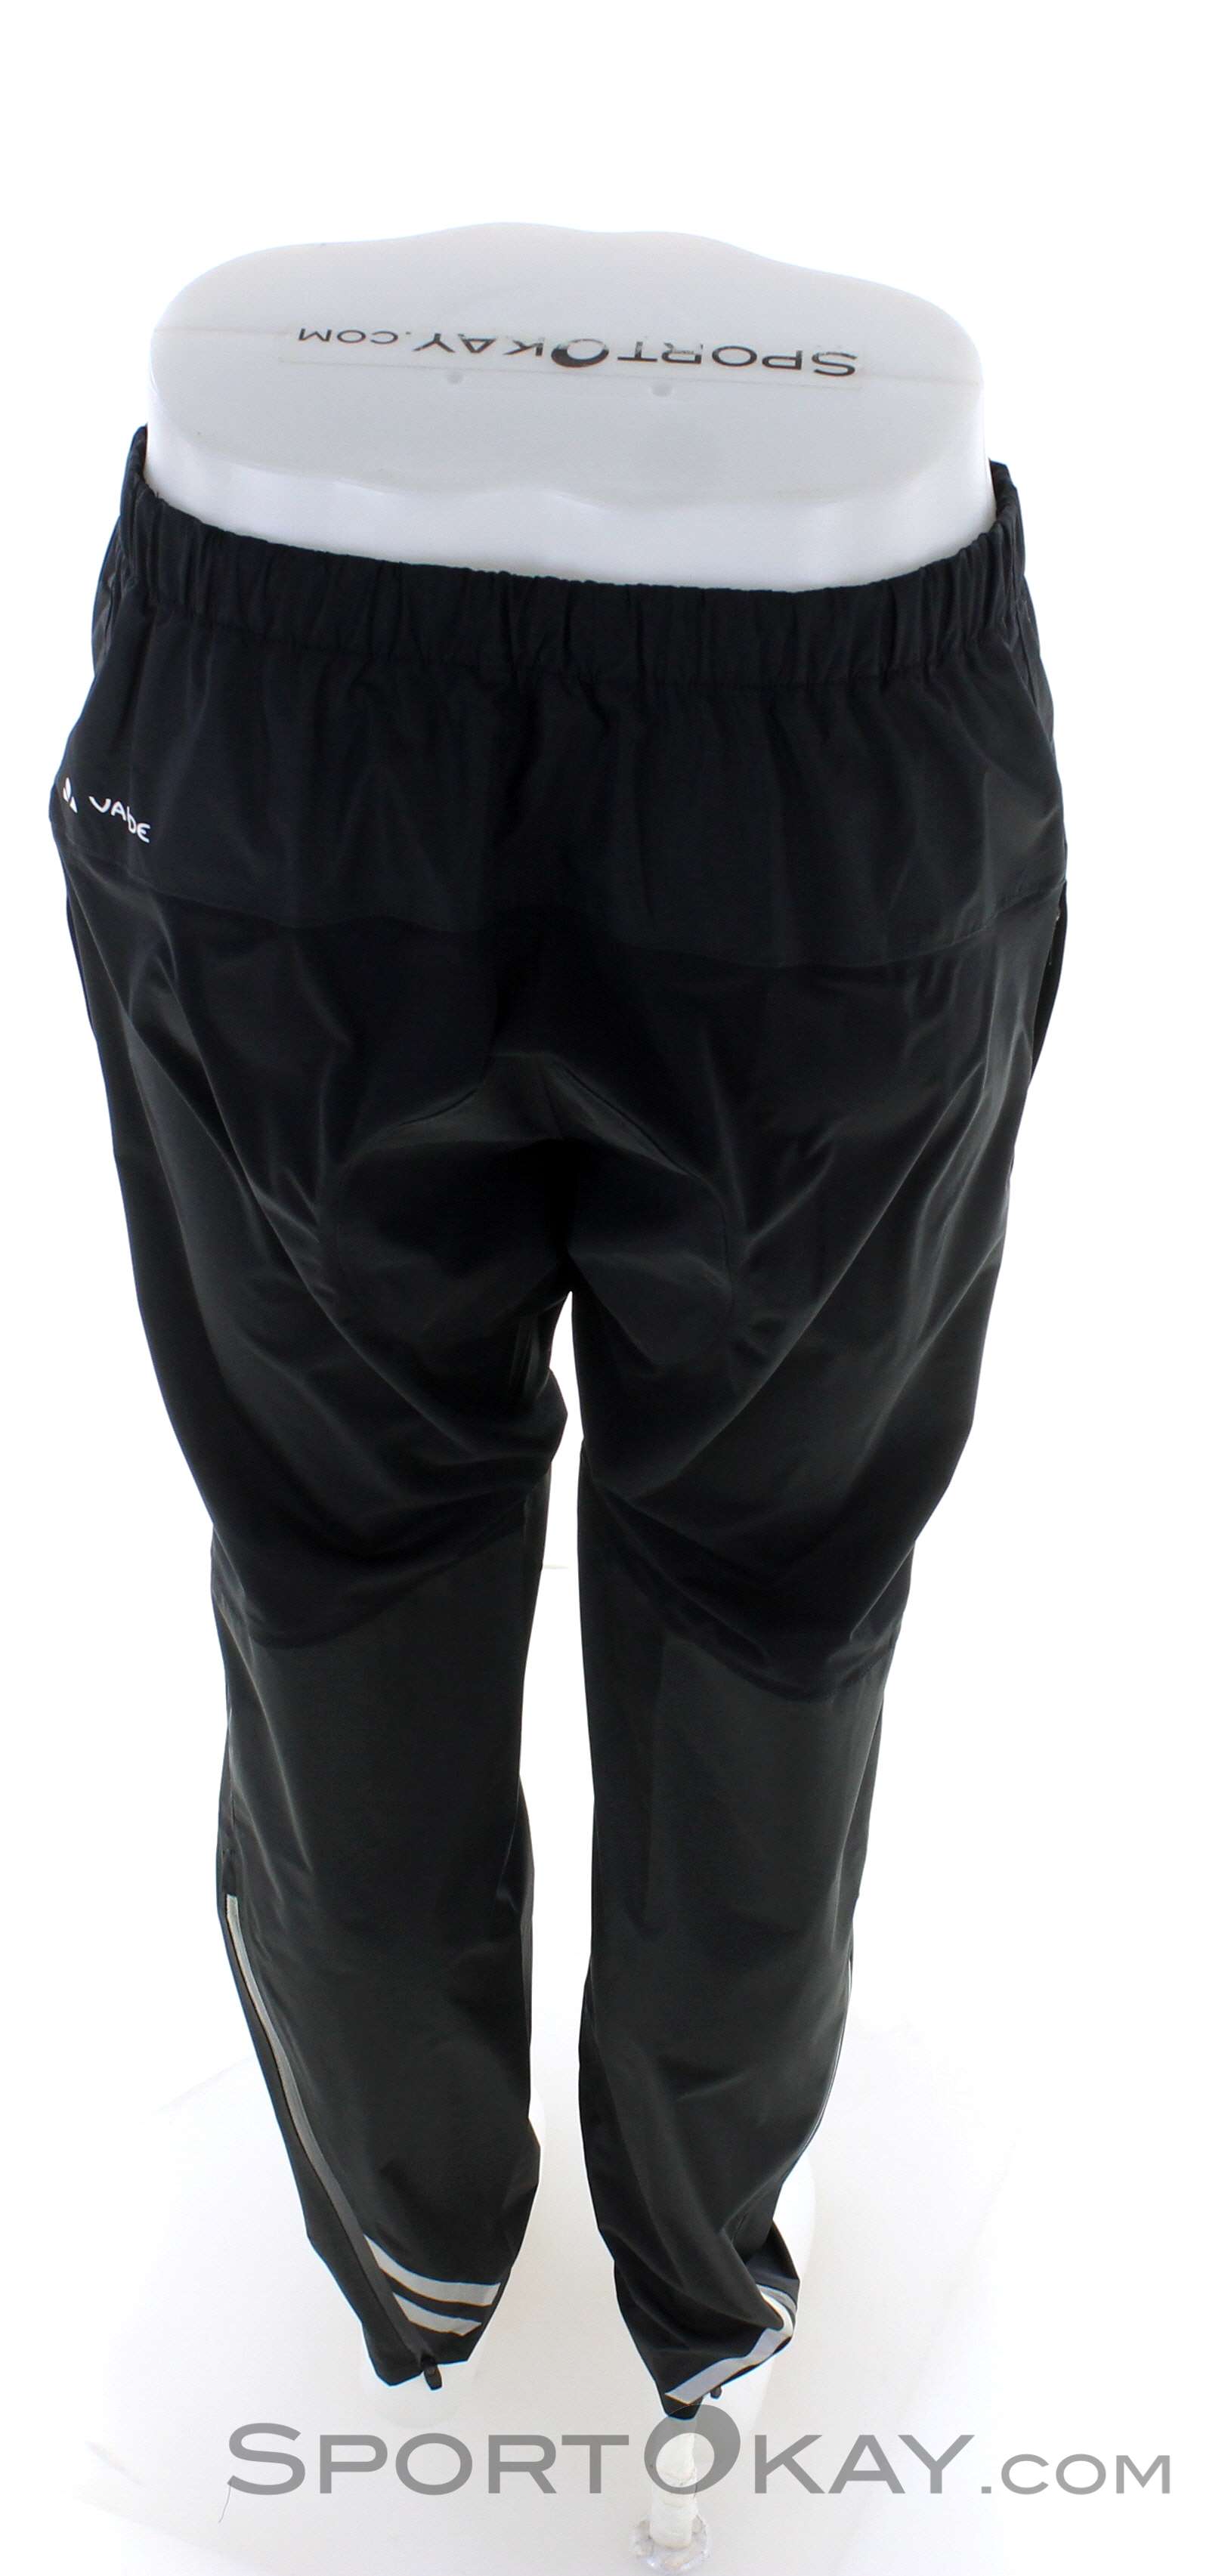 Vaude Pantalones Impermeables Mujer - Yaras Rain Zip III - negro